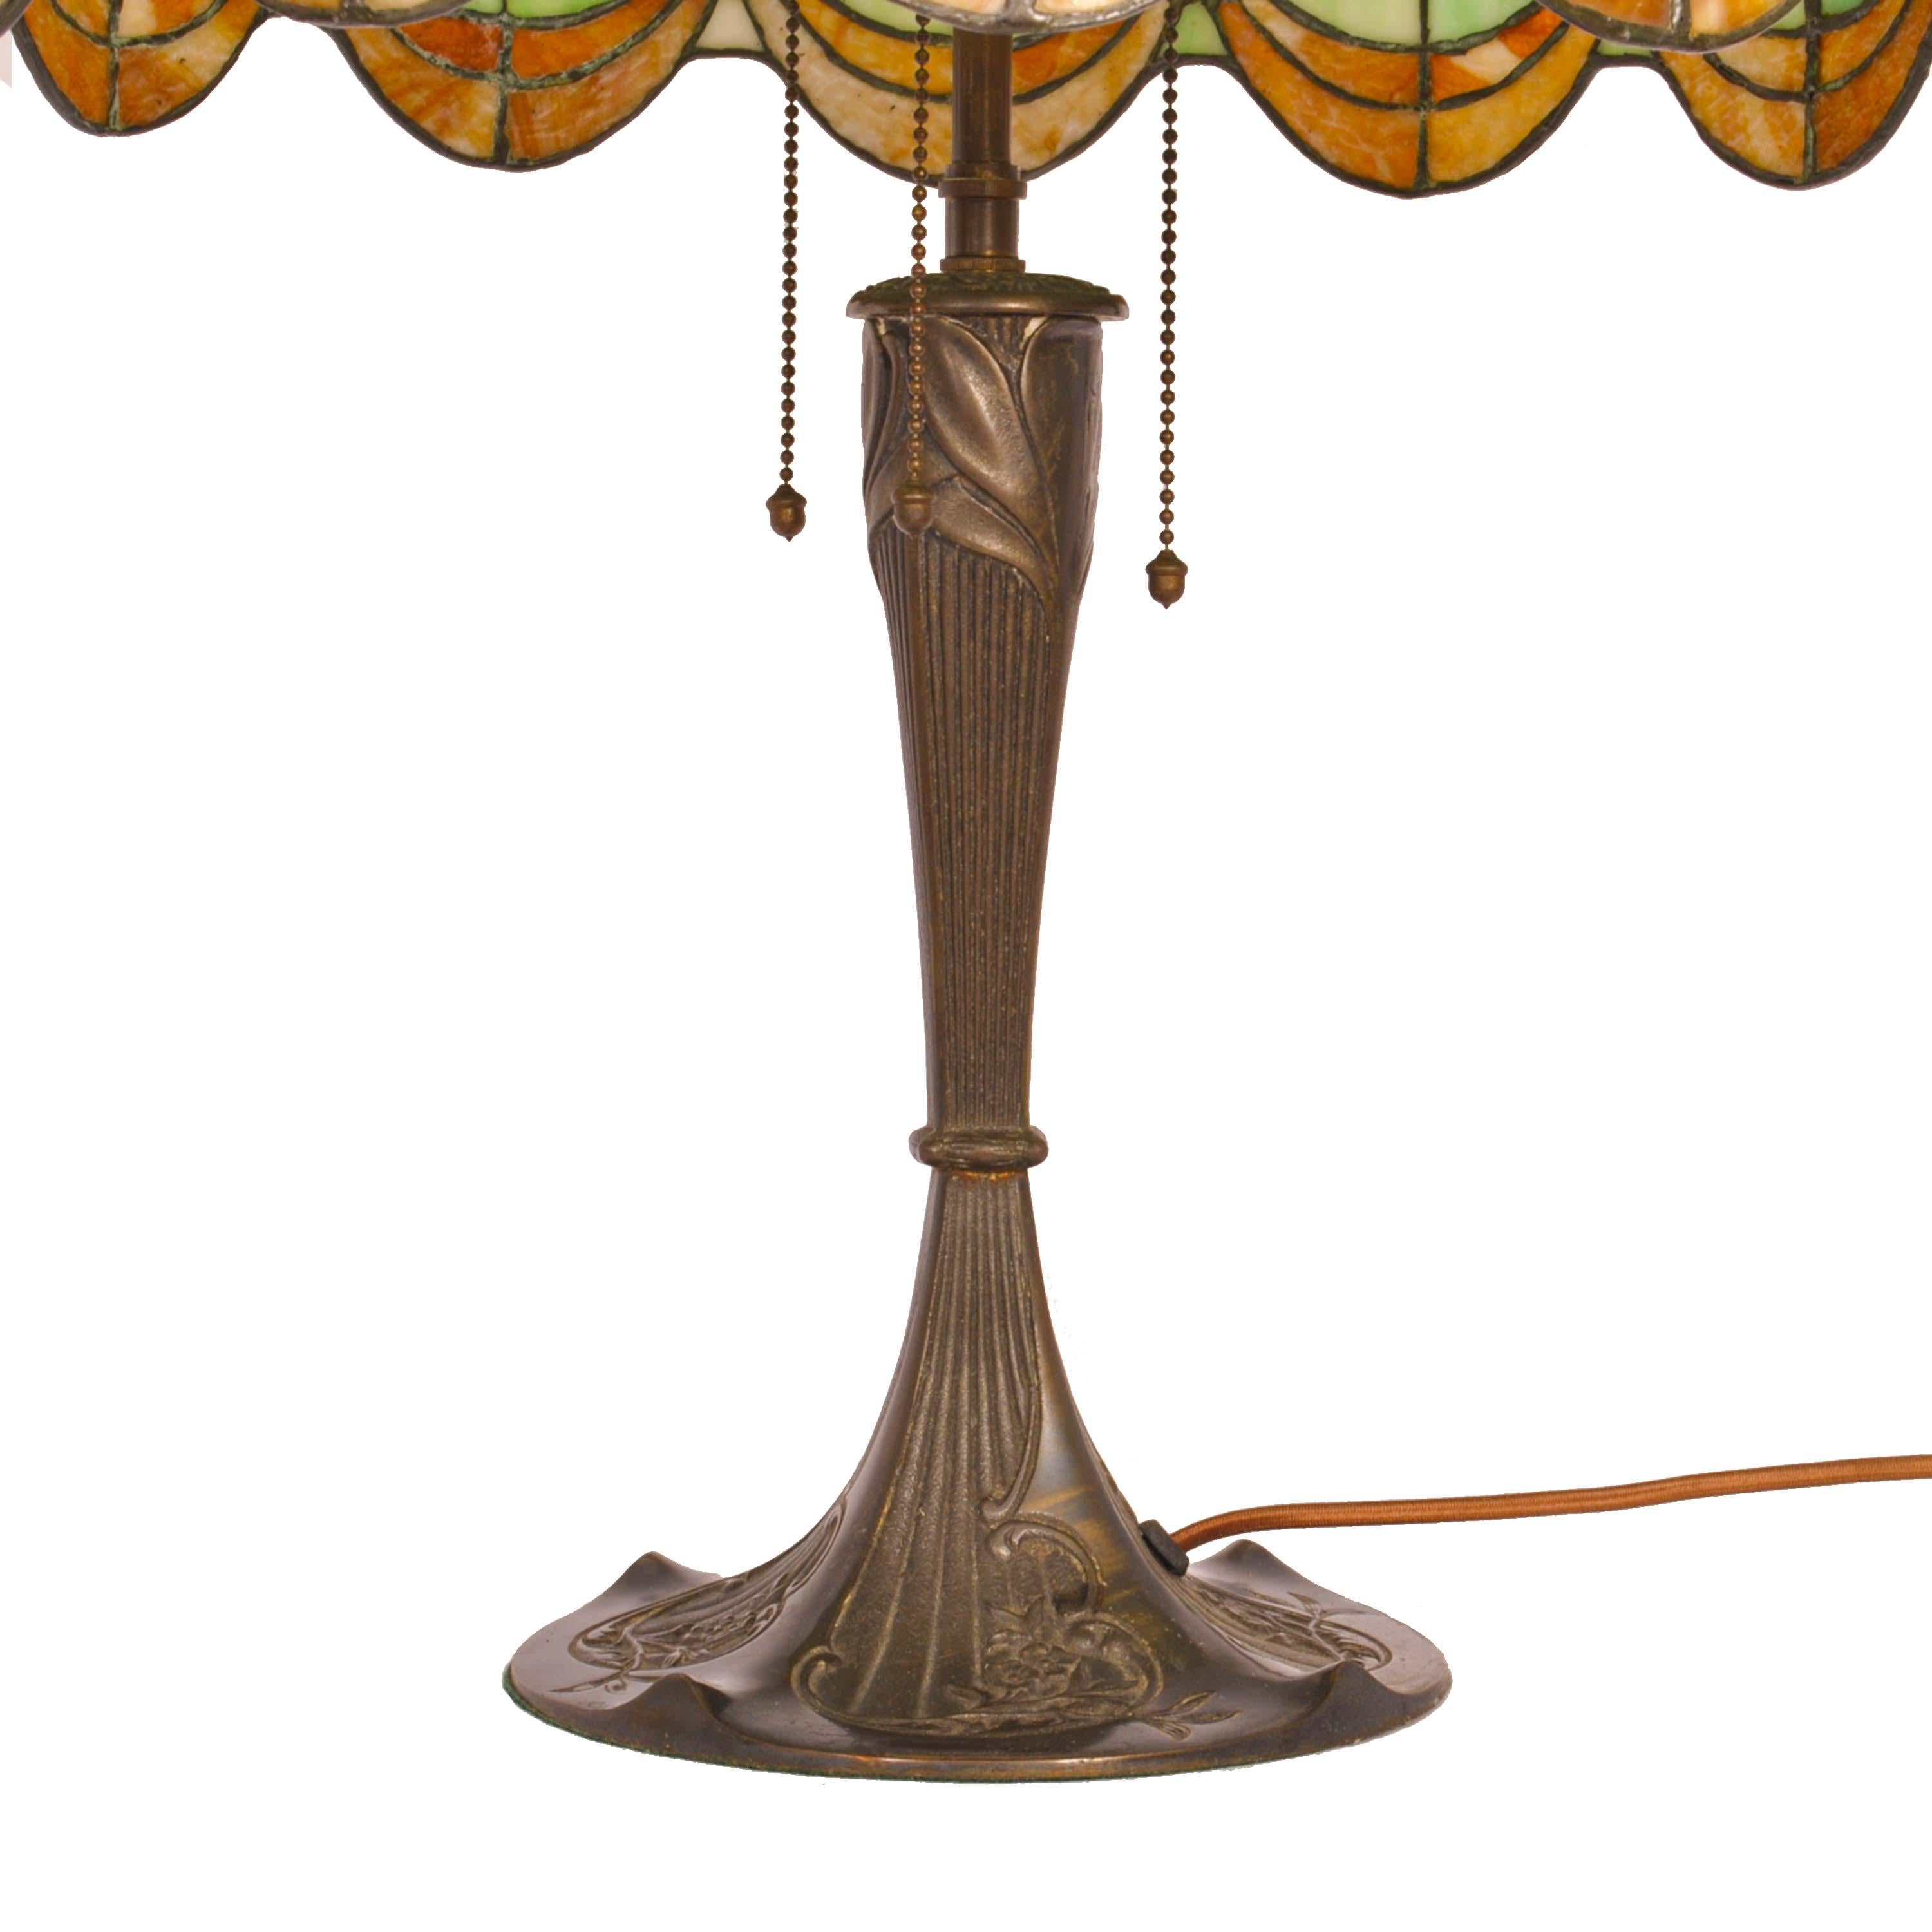 Antique American Art Nouveau Bronze & Leaded Glass Table Lamp by Wilkinson, 1910 For Sale 1